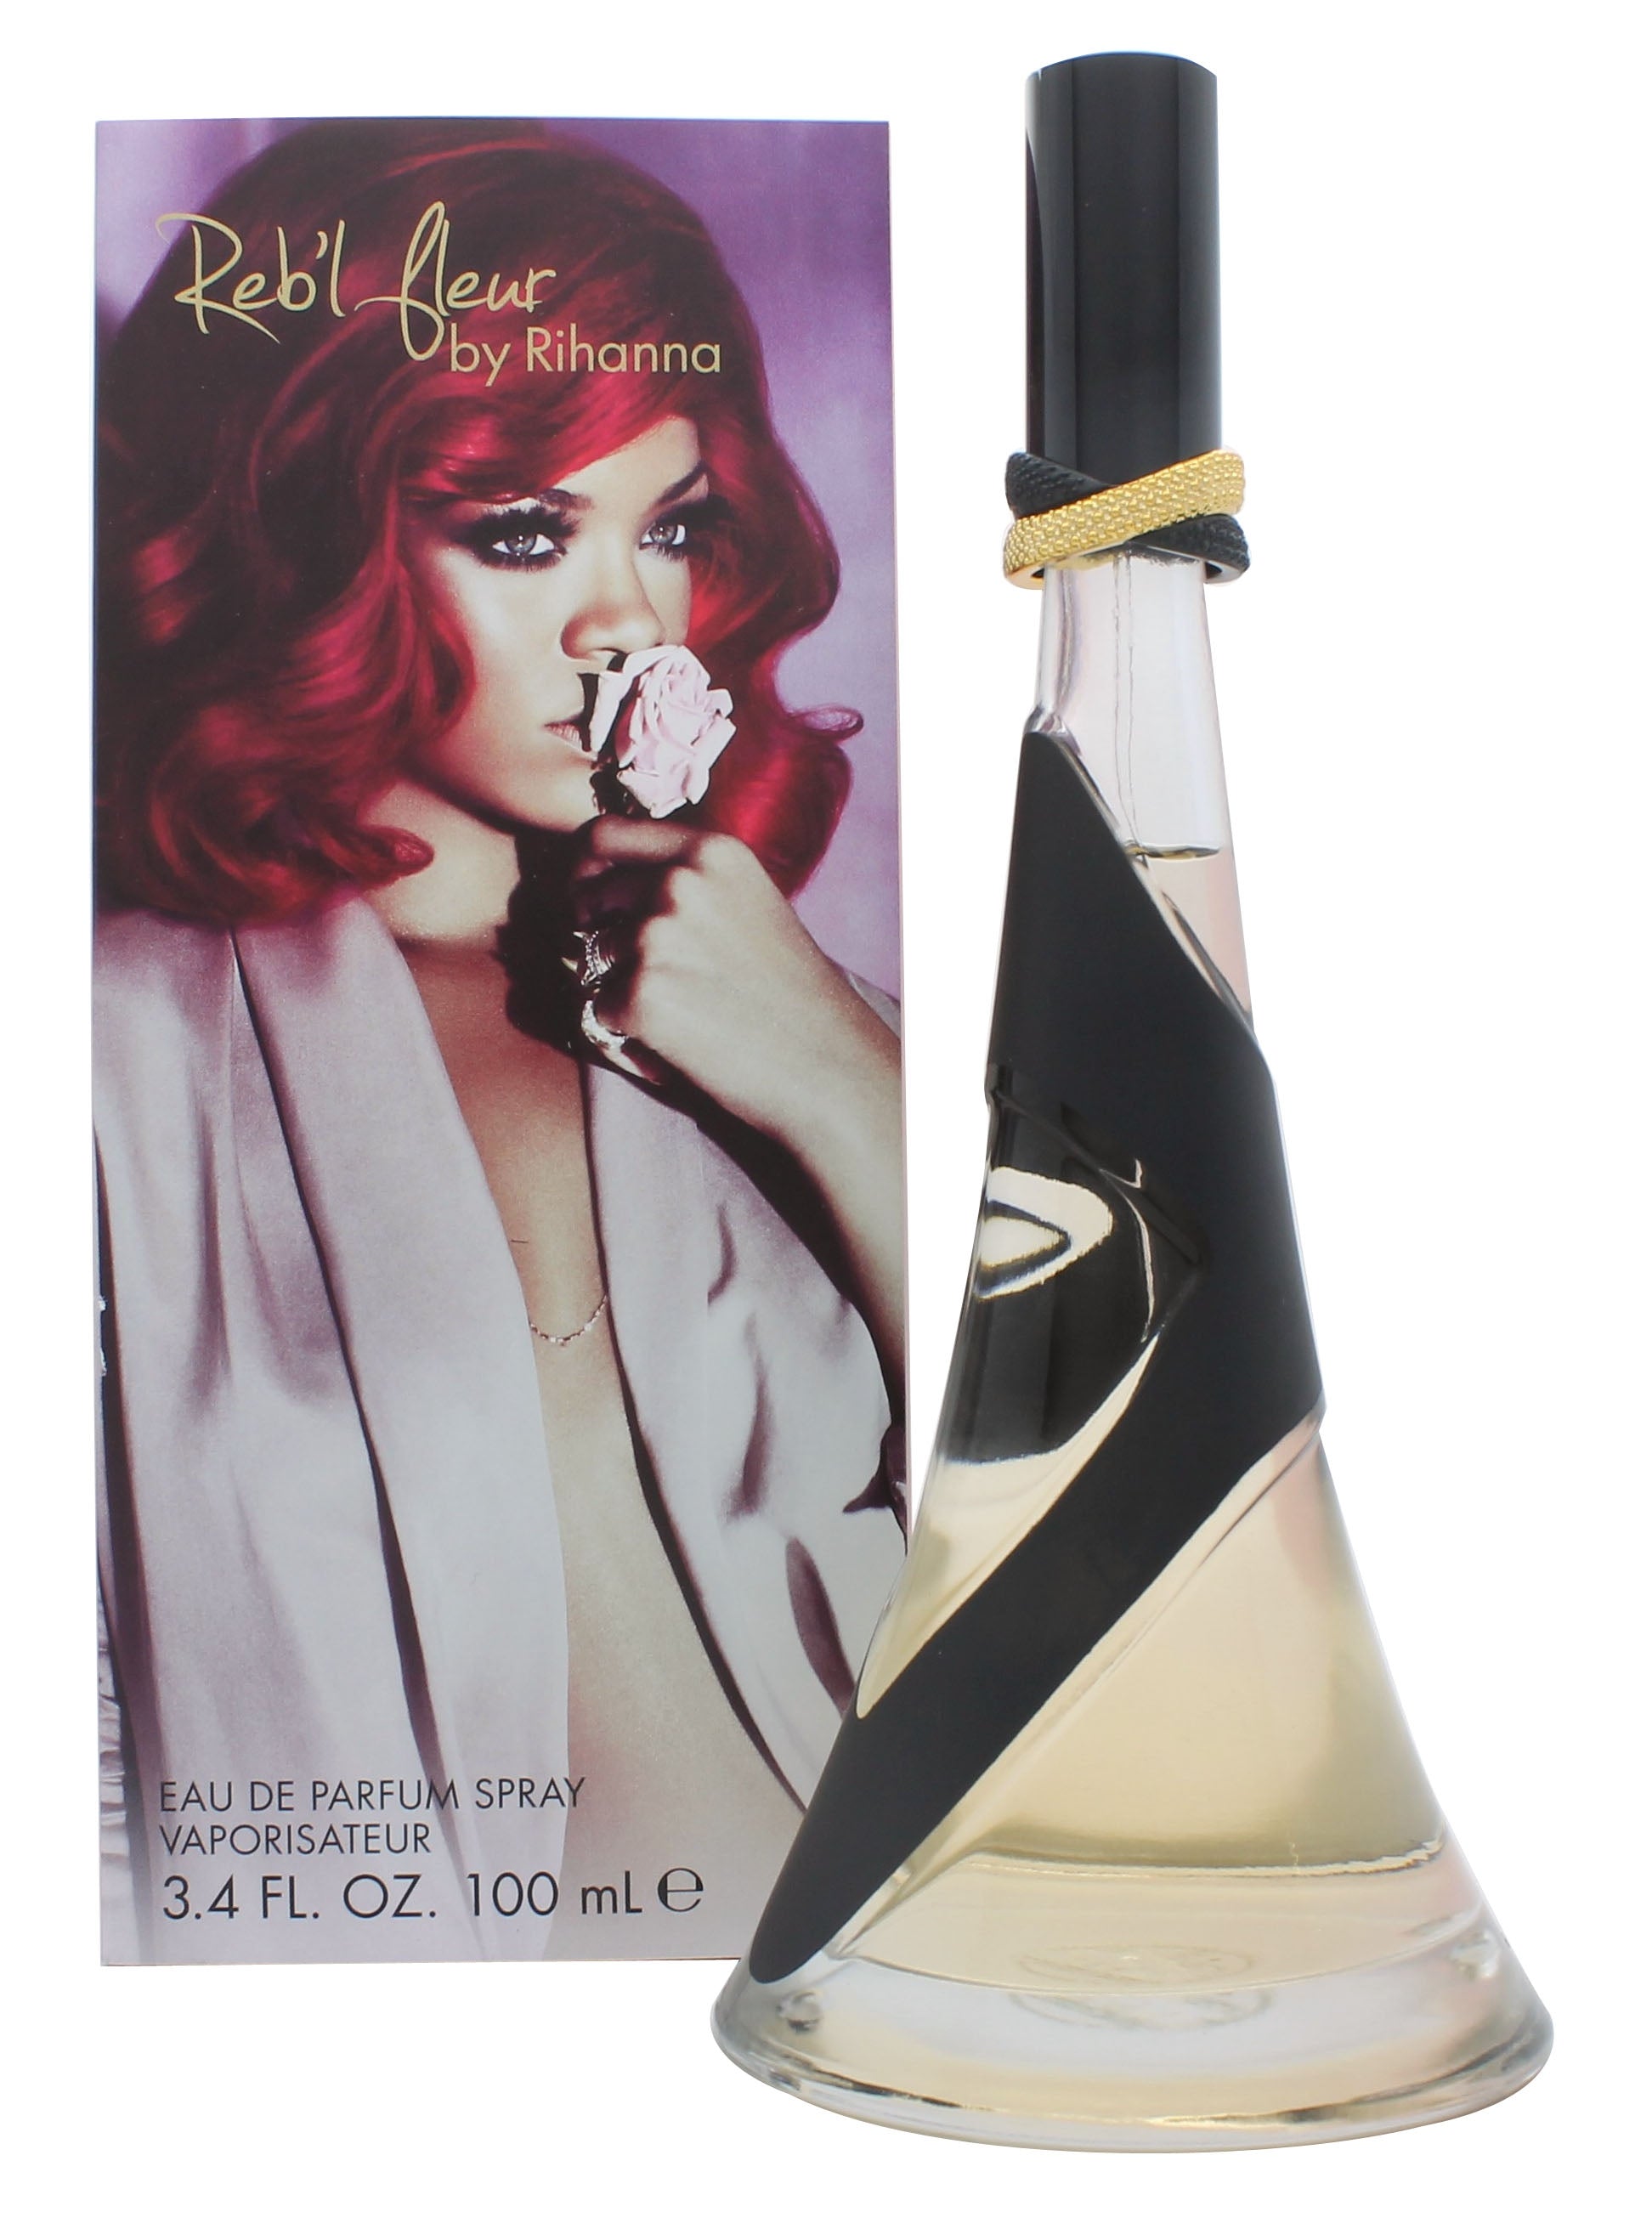 View Rihanna Rebl Fleur Eau de Parfum 100ml Spray information